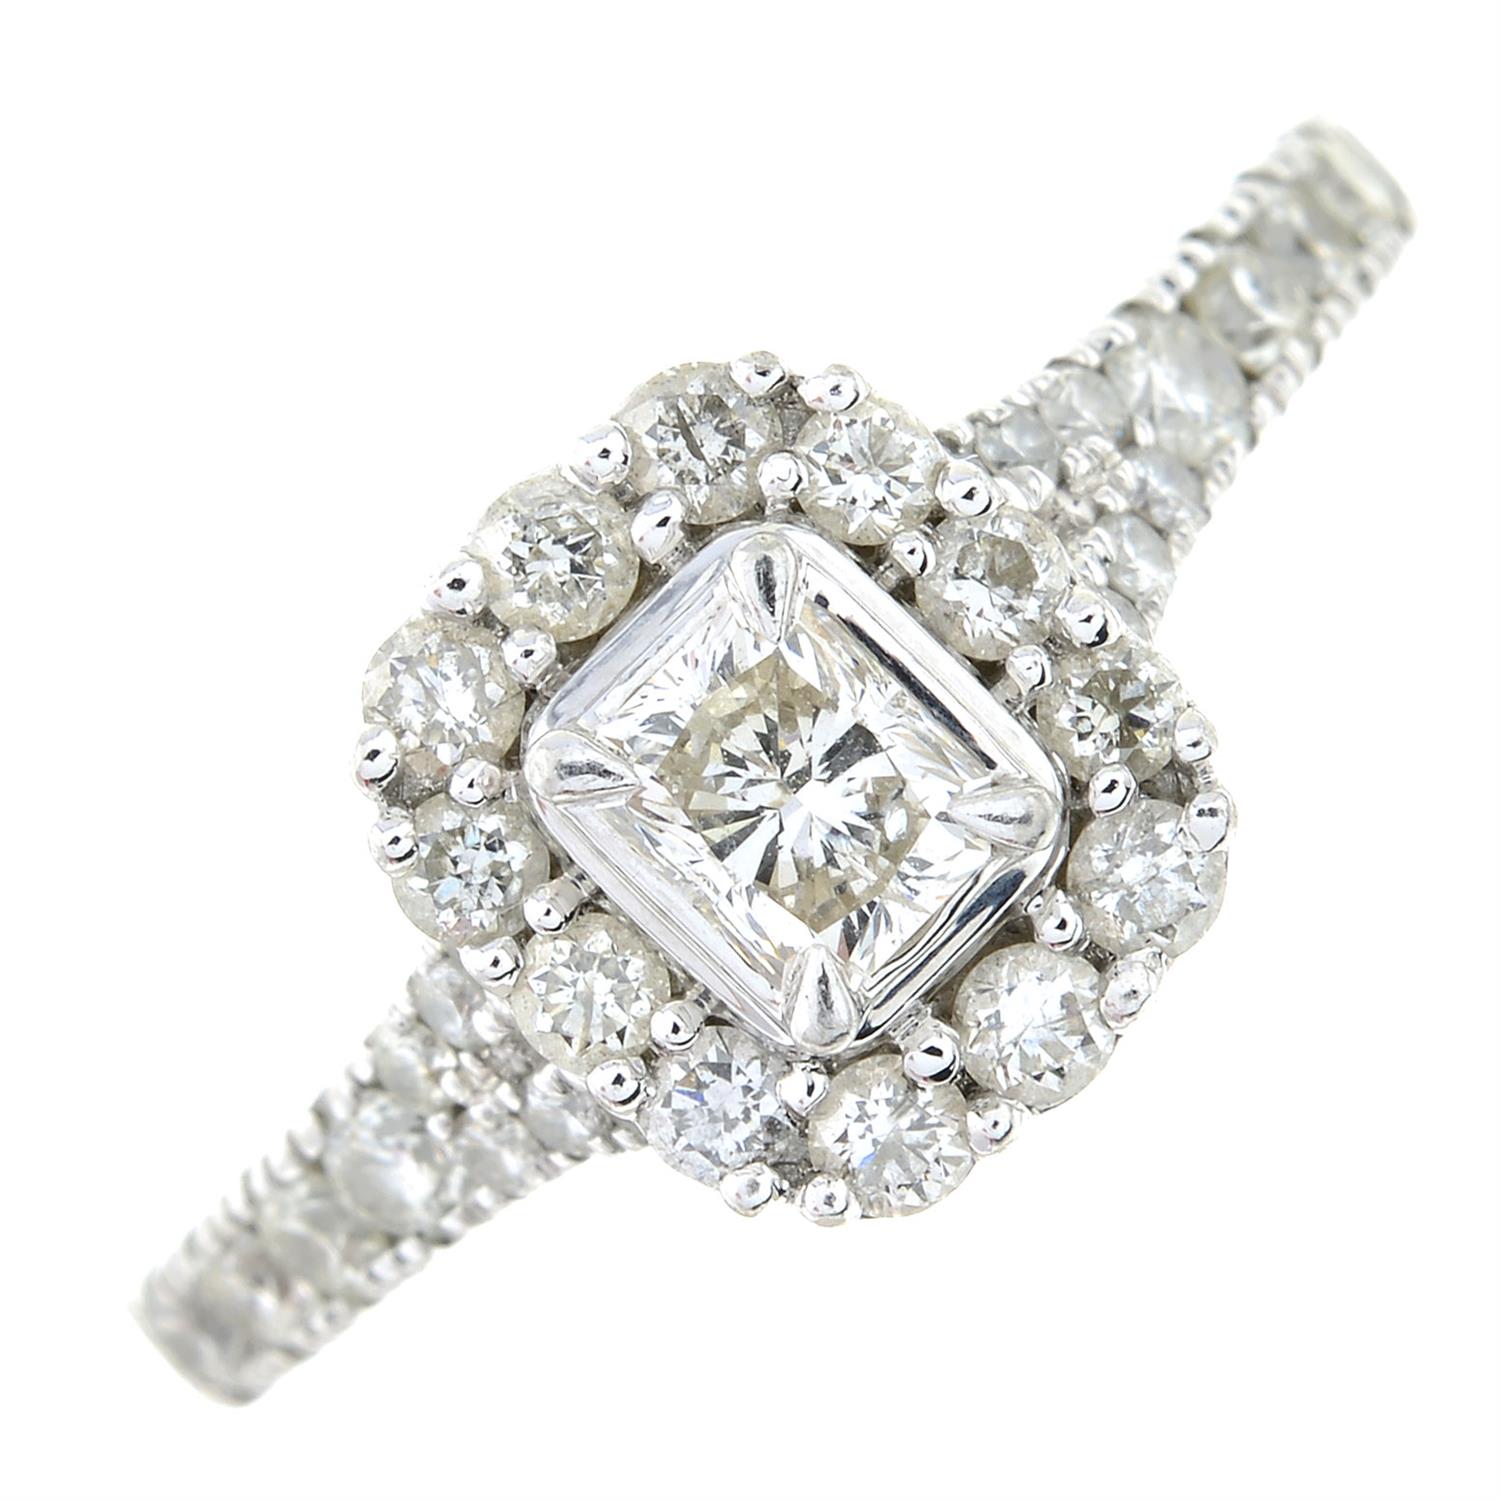 A platinum vari-cut diamond cluster ring.